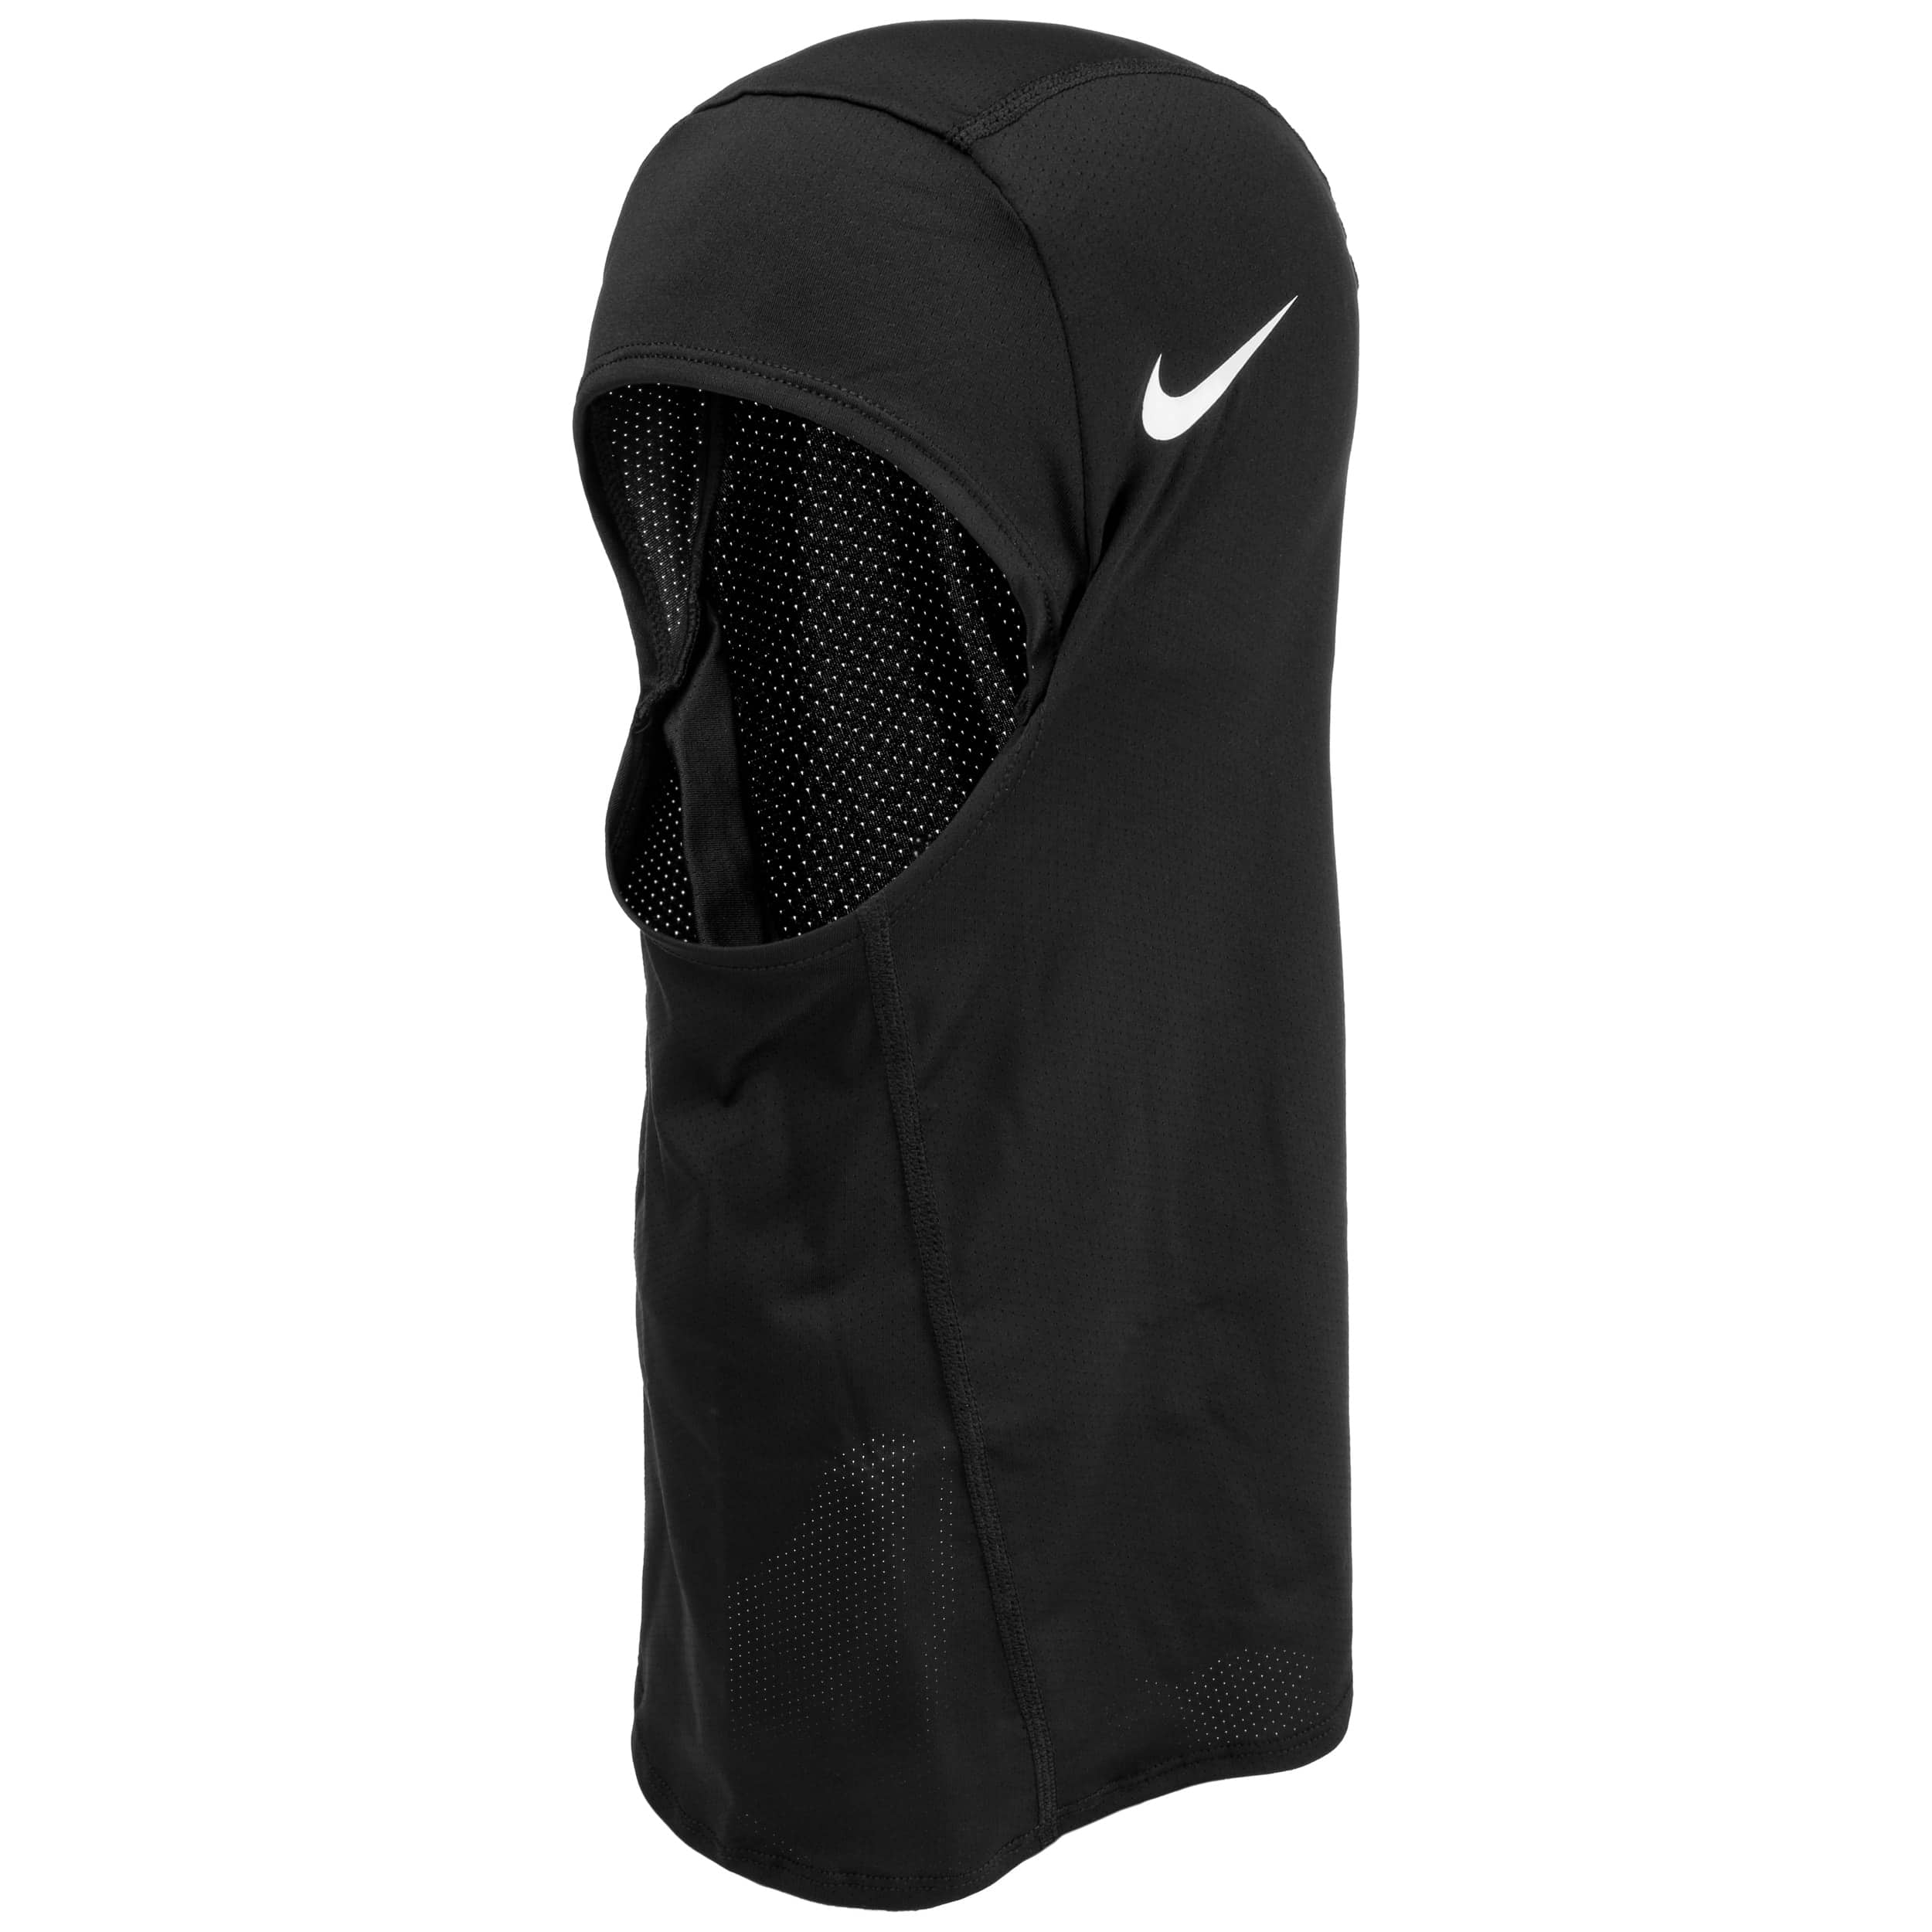 Pro Hijab 2.0 Headscarf by Nike - 43,95 €